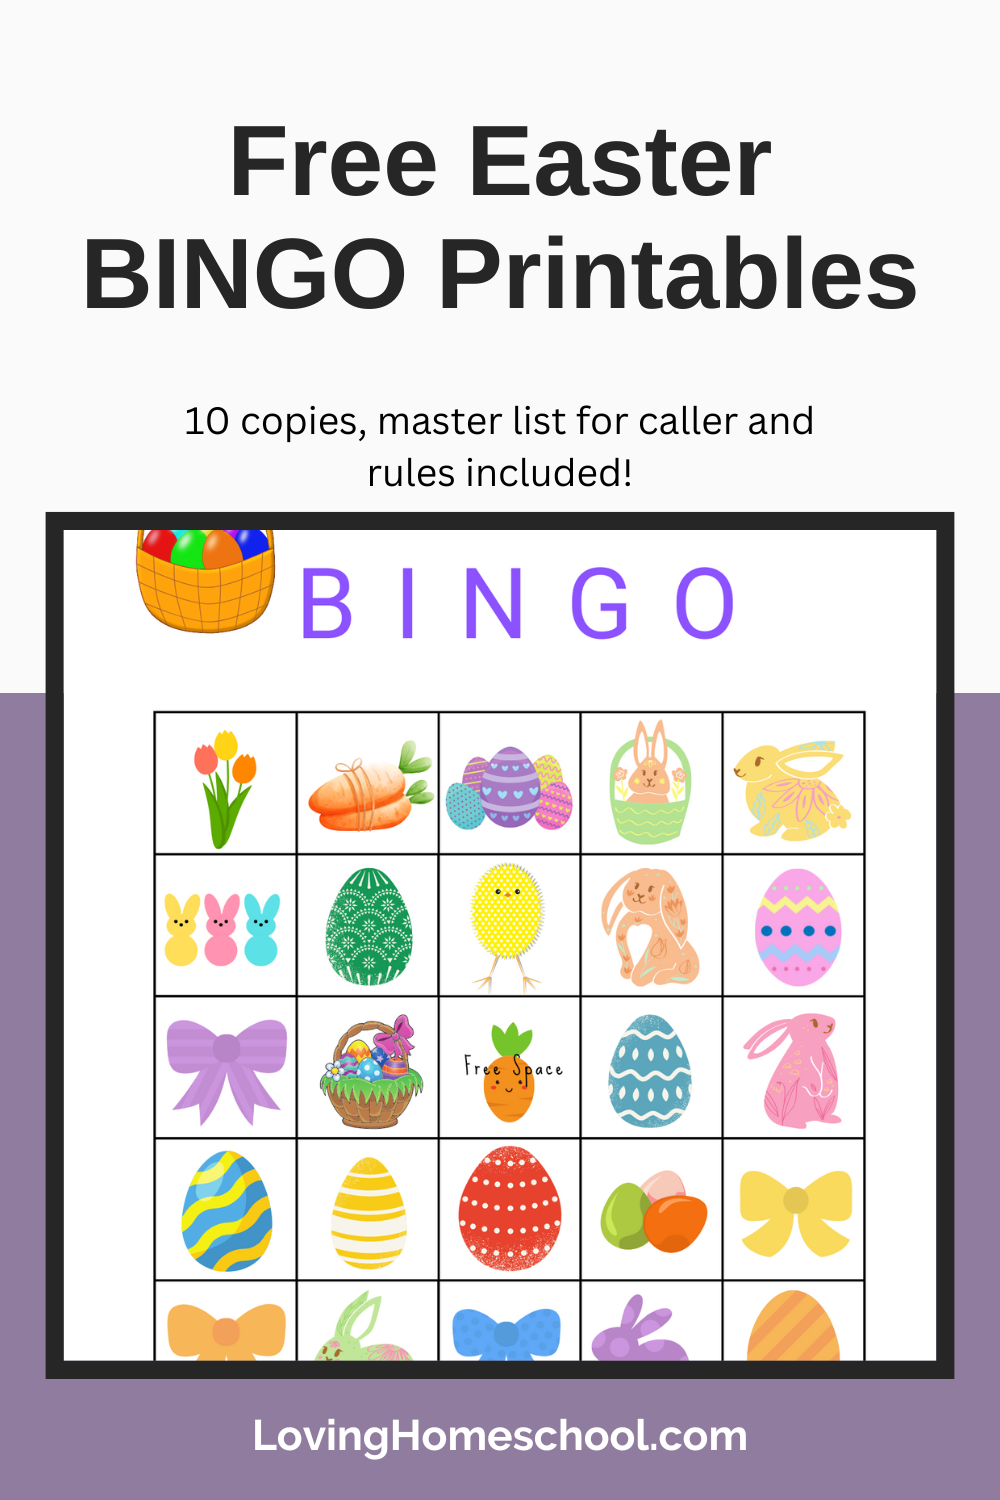 Free Easter BINGO Printables Pinterest Pin